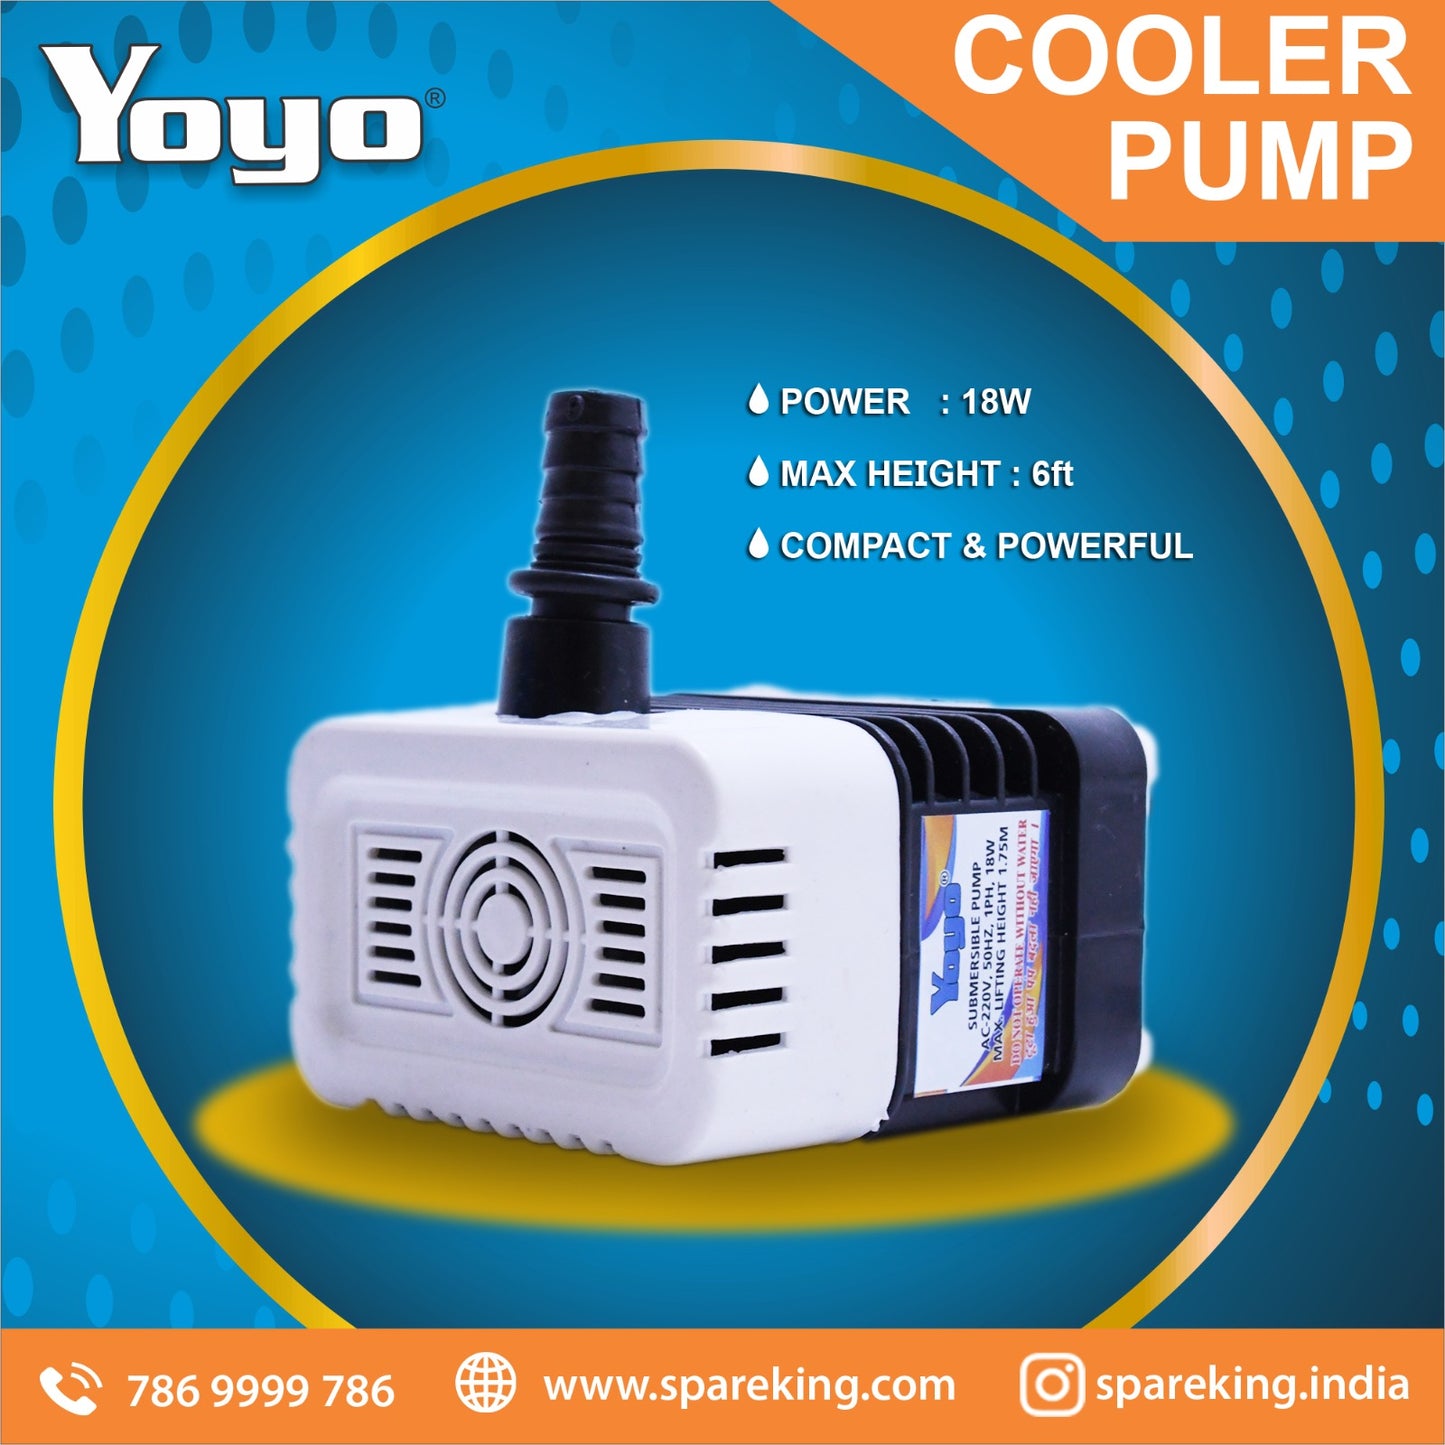 Yoyo Cooler Water Pump